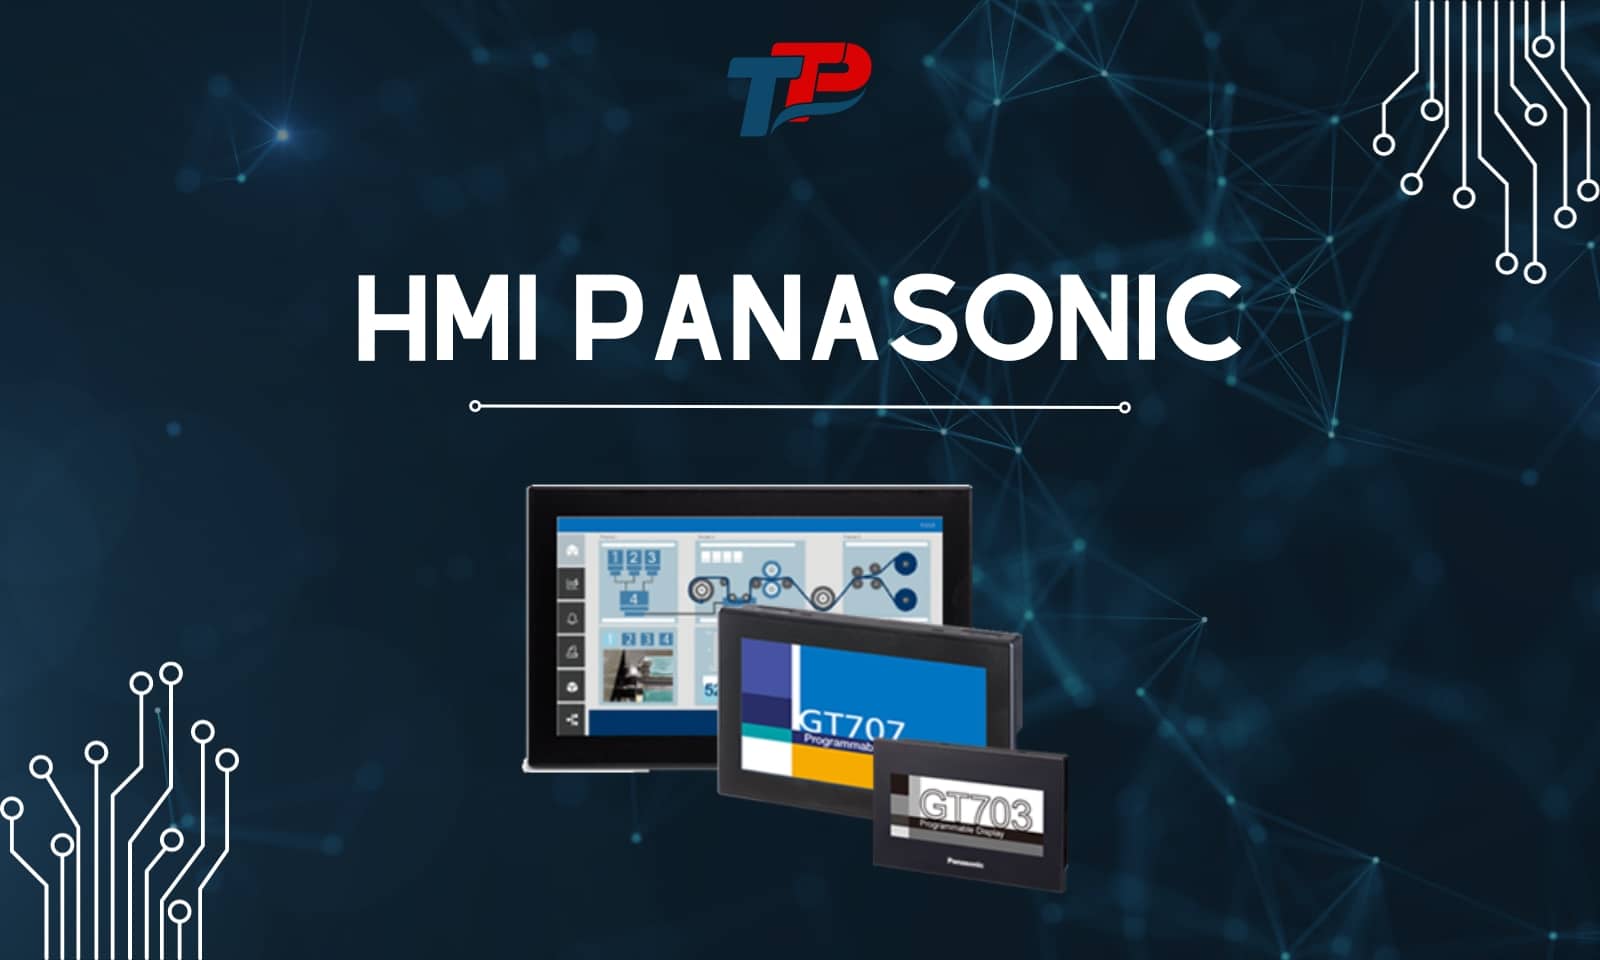 HMI Panasonic